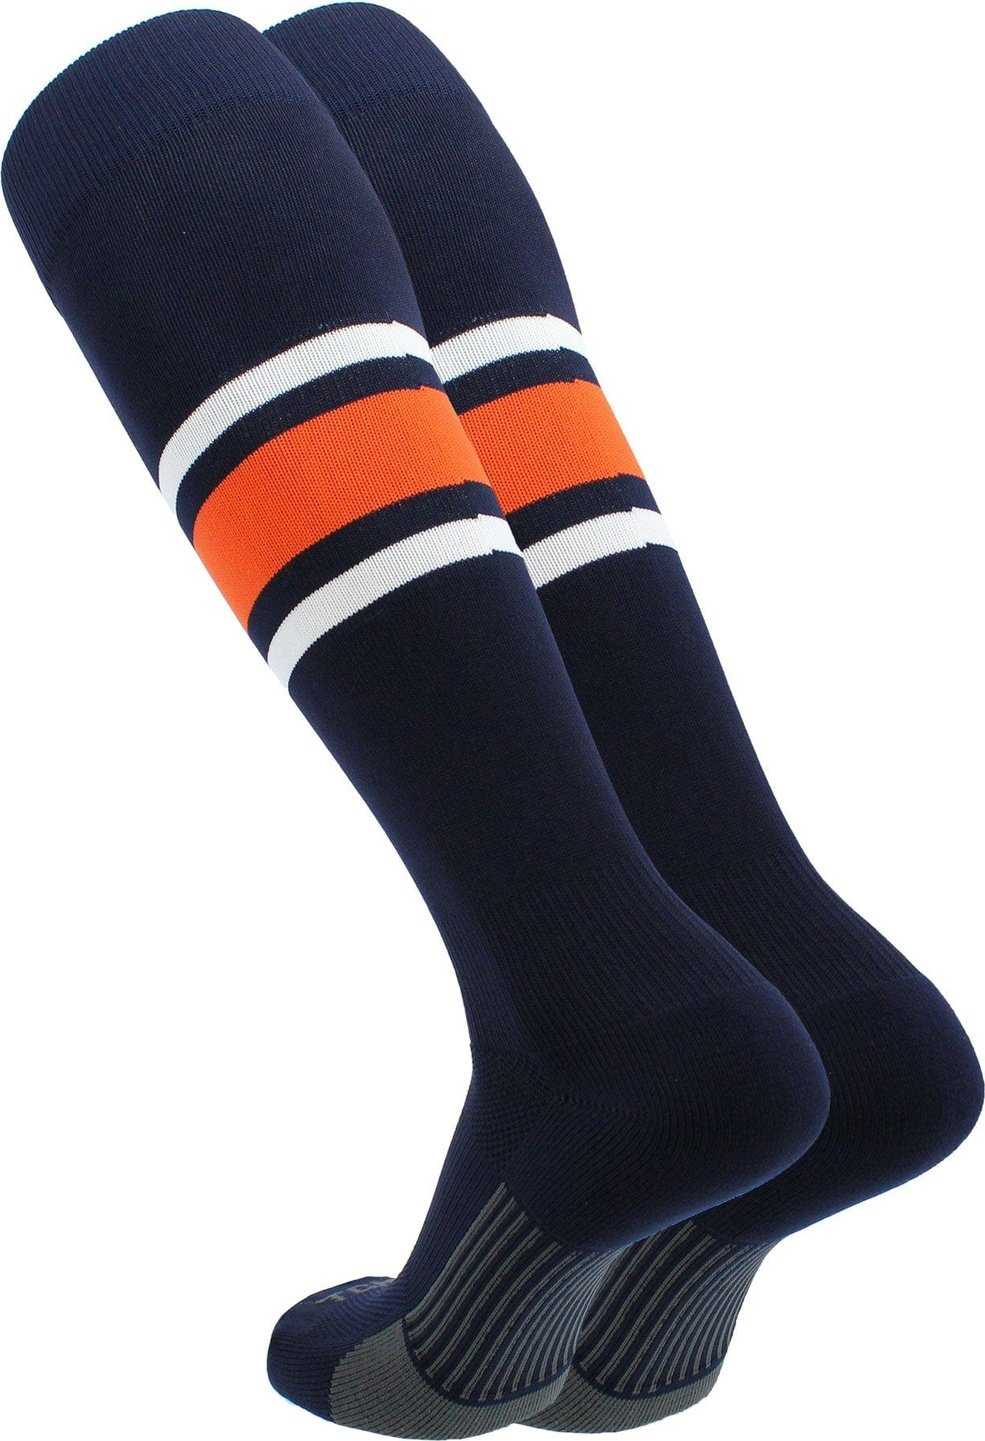 TCK Dugout Knee High Socks - Navy White Orange - HIT a Double - 2